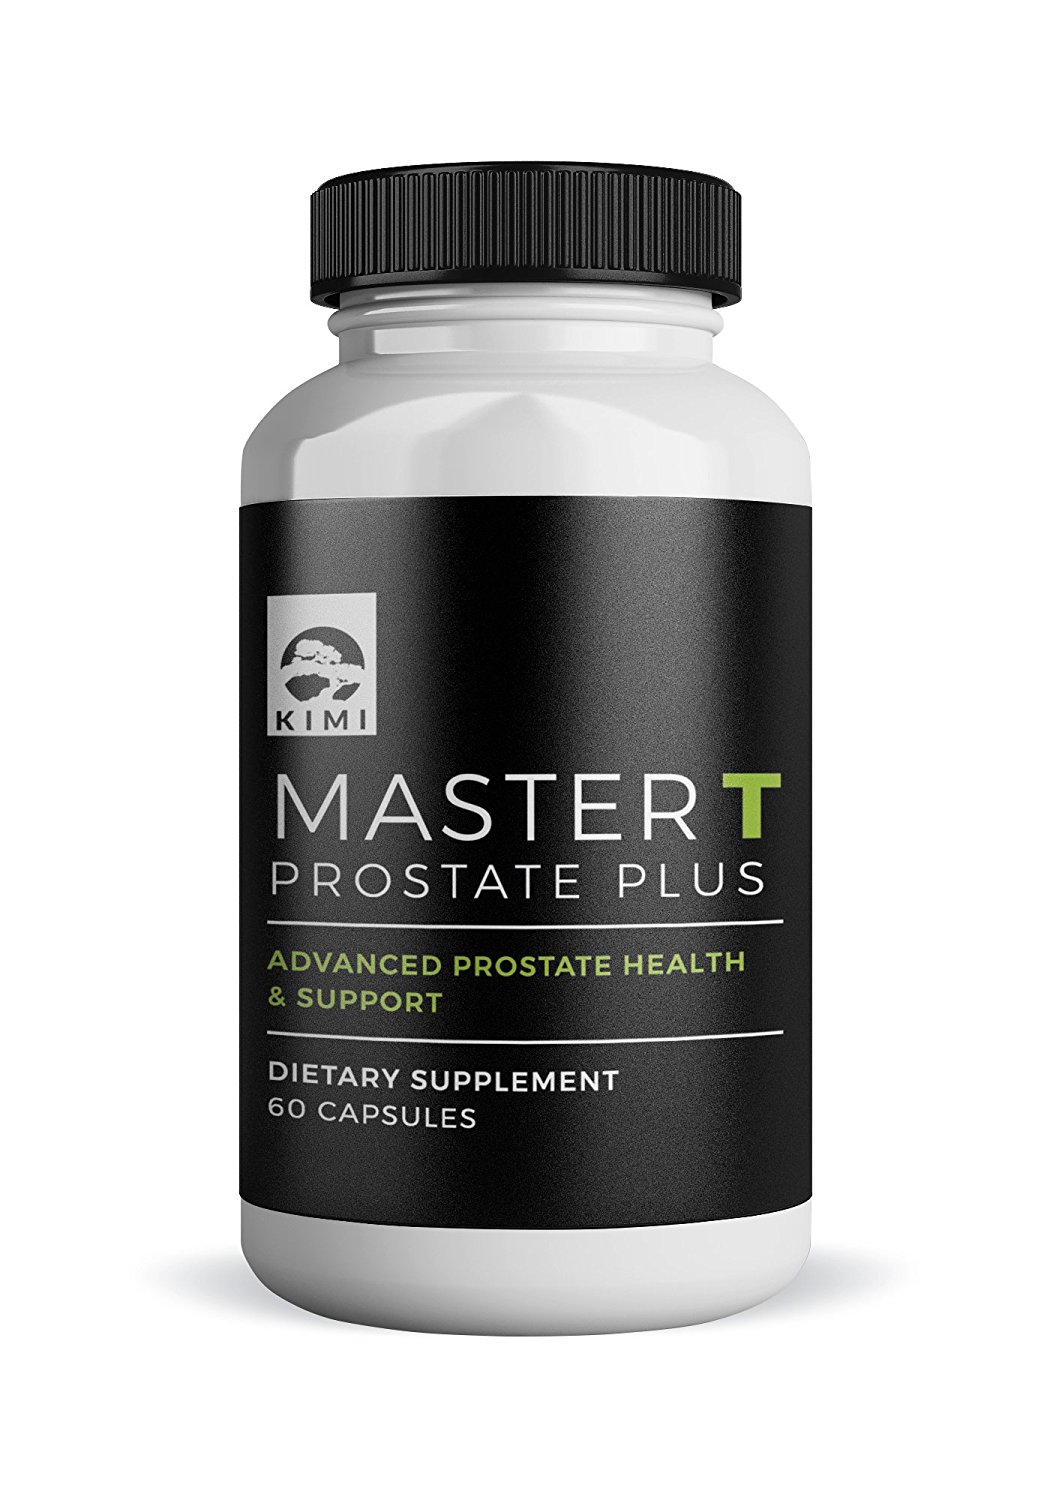 Master T Prostate